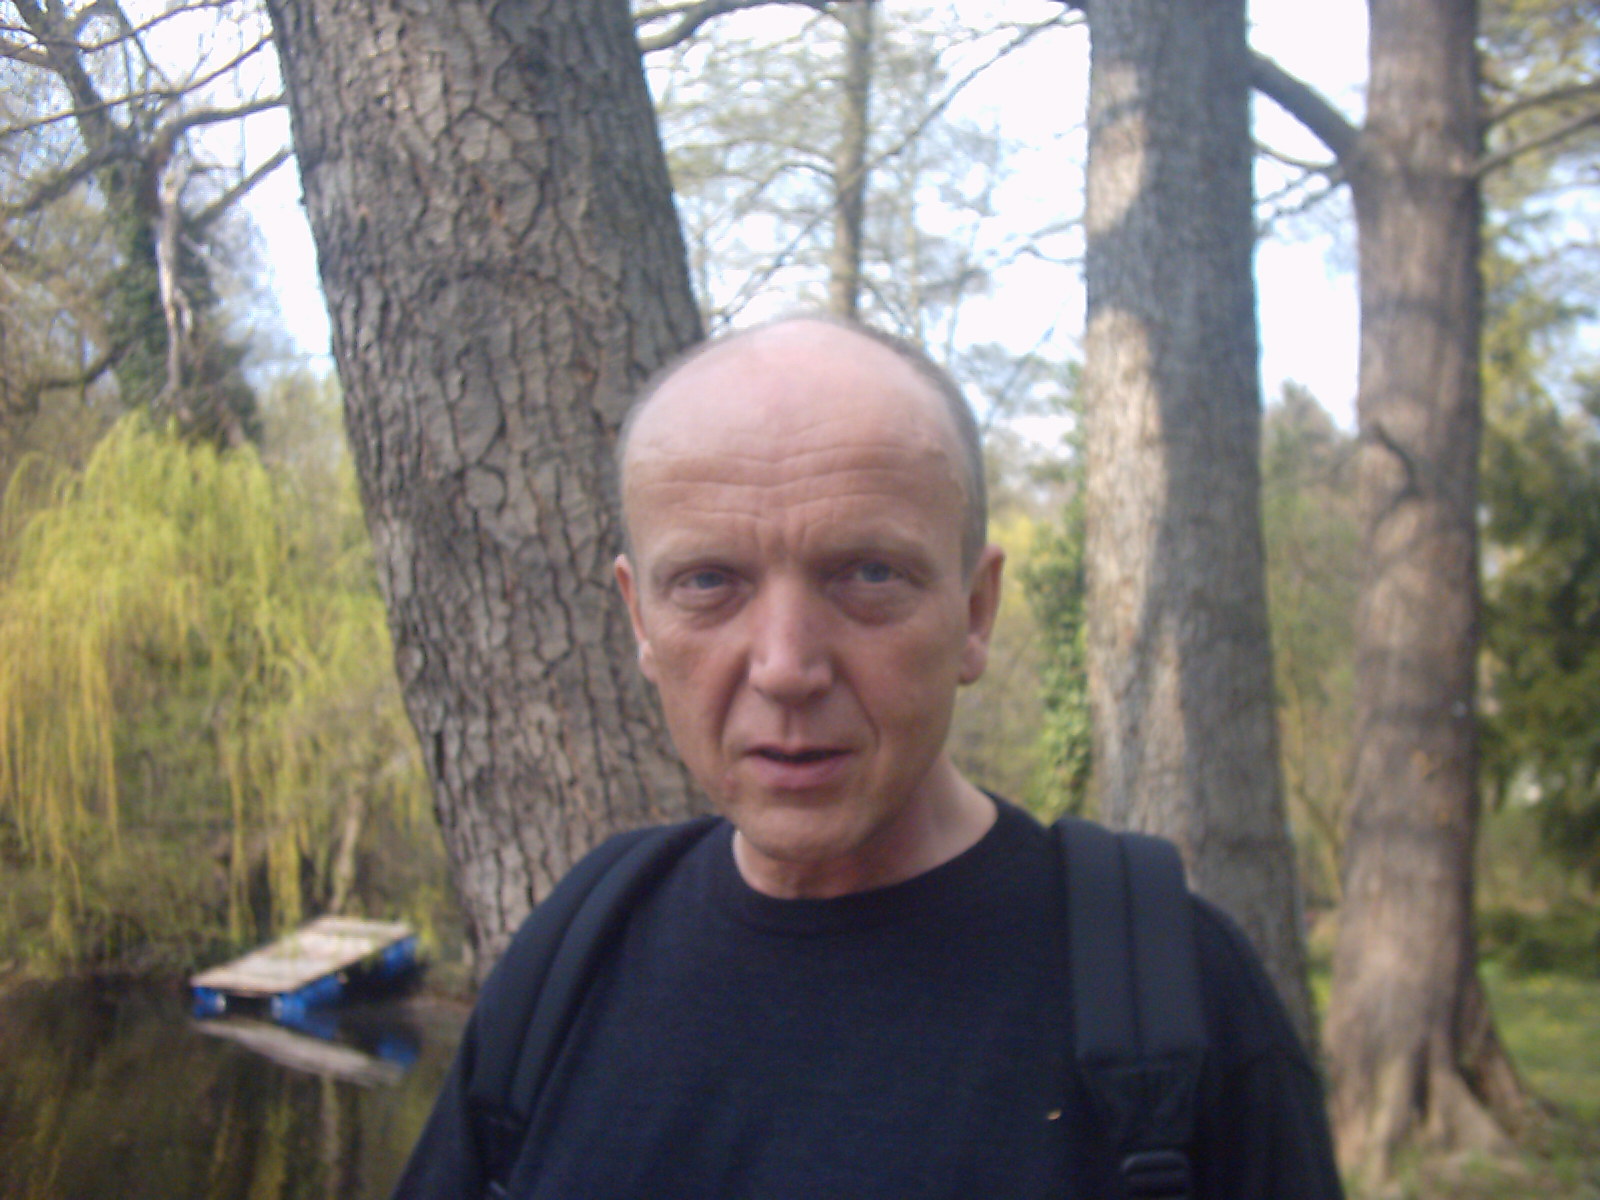 Erwin Thomasius im April 2004 am Waldsee in Zehlendorf in Berlin. Photographin: Astrd Wolfig.